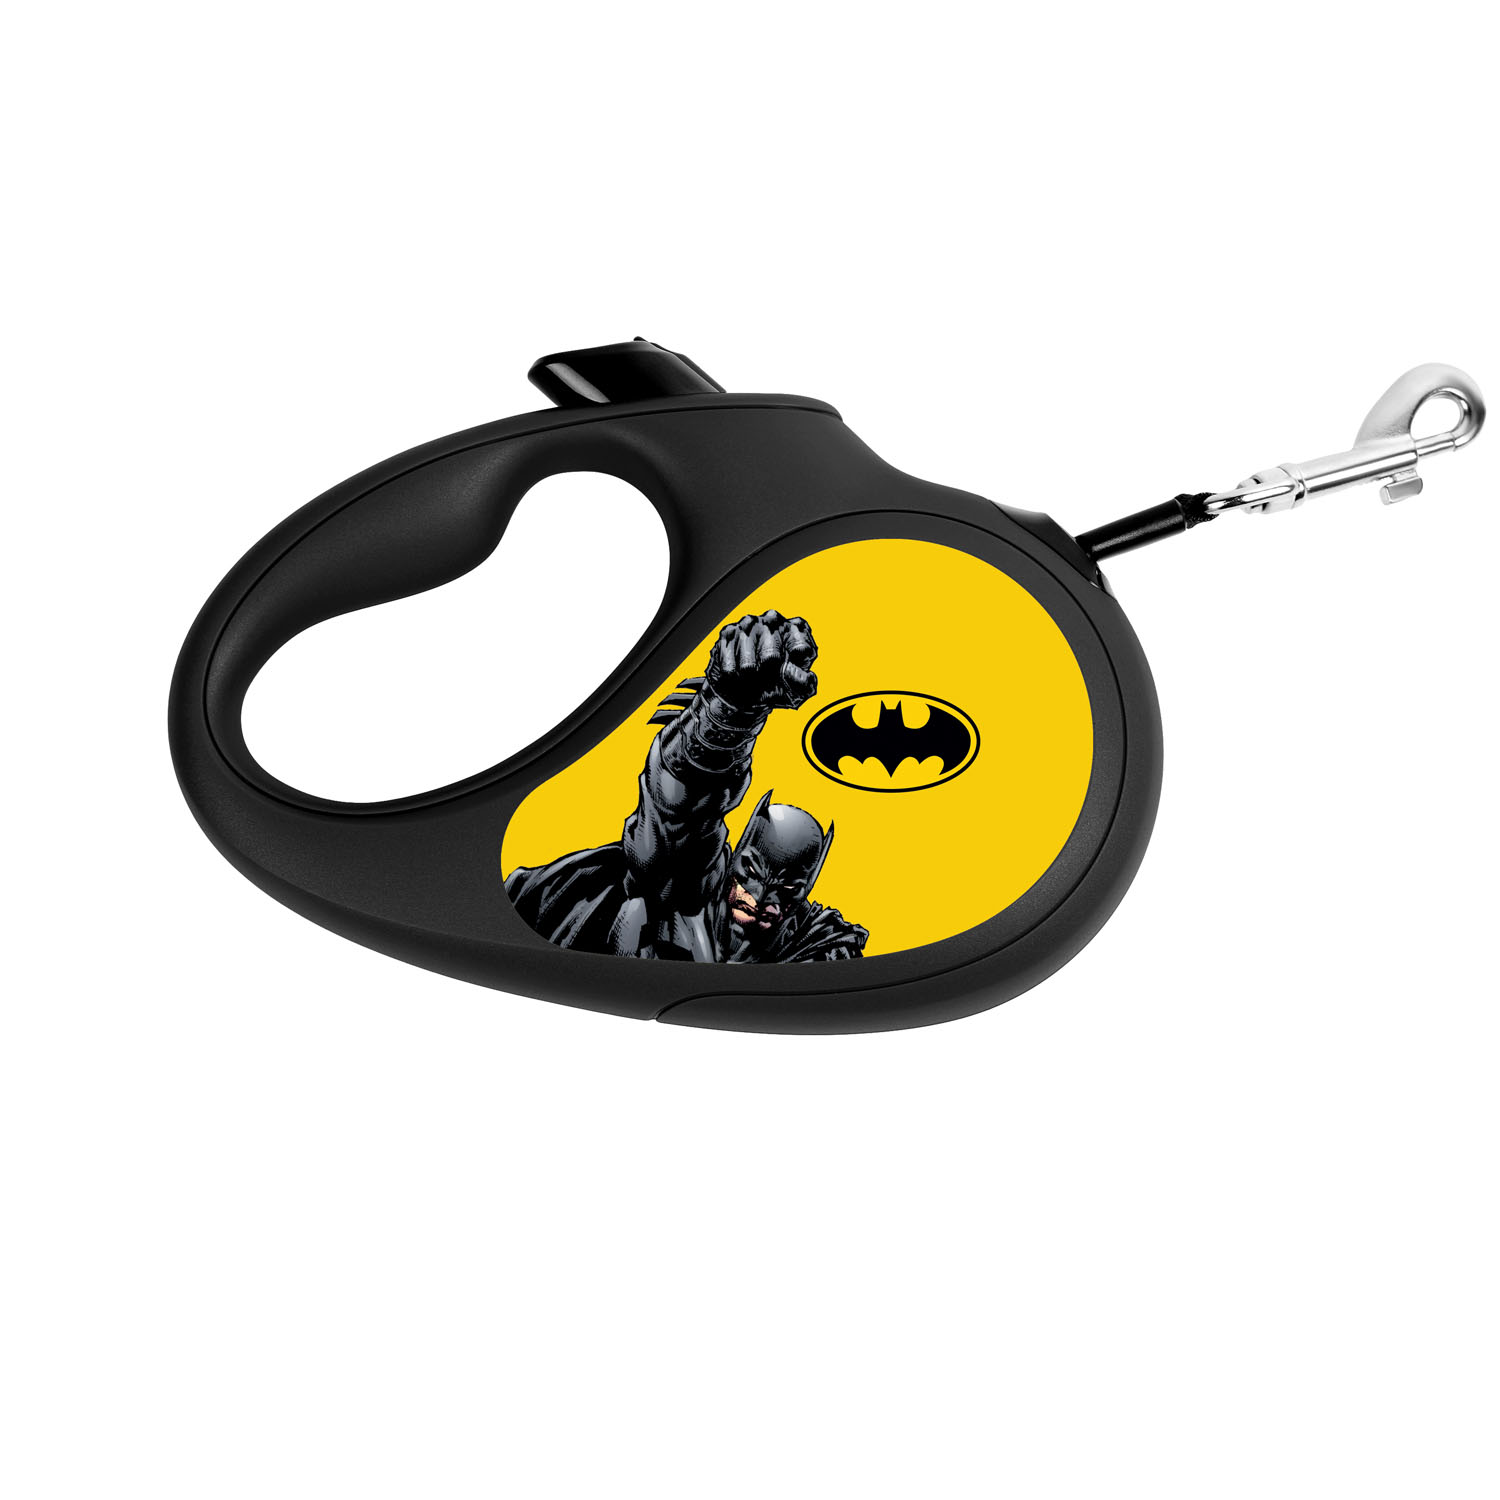 Wau Dog Поводок-рулетка WAUDOG с рисунком Бэтмен Желтый, размер S, до 15 кг, 5м черная